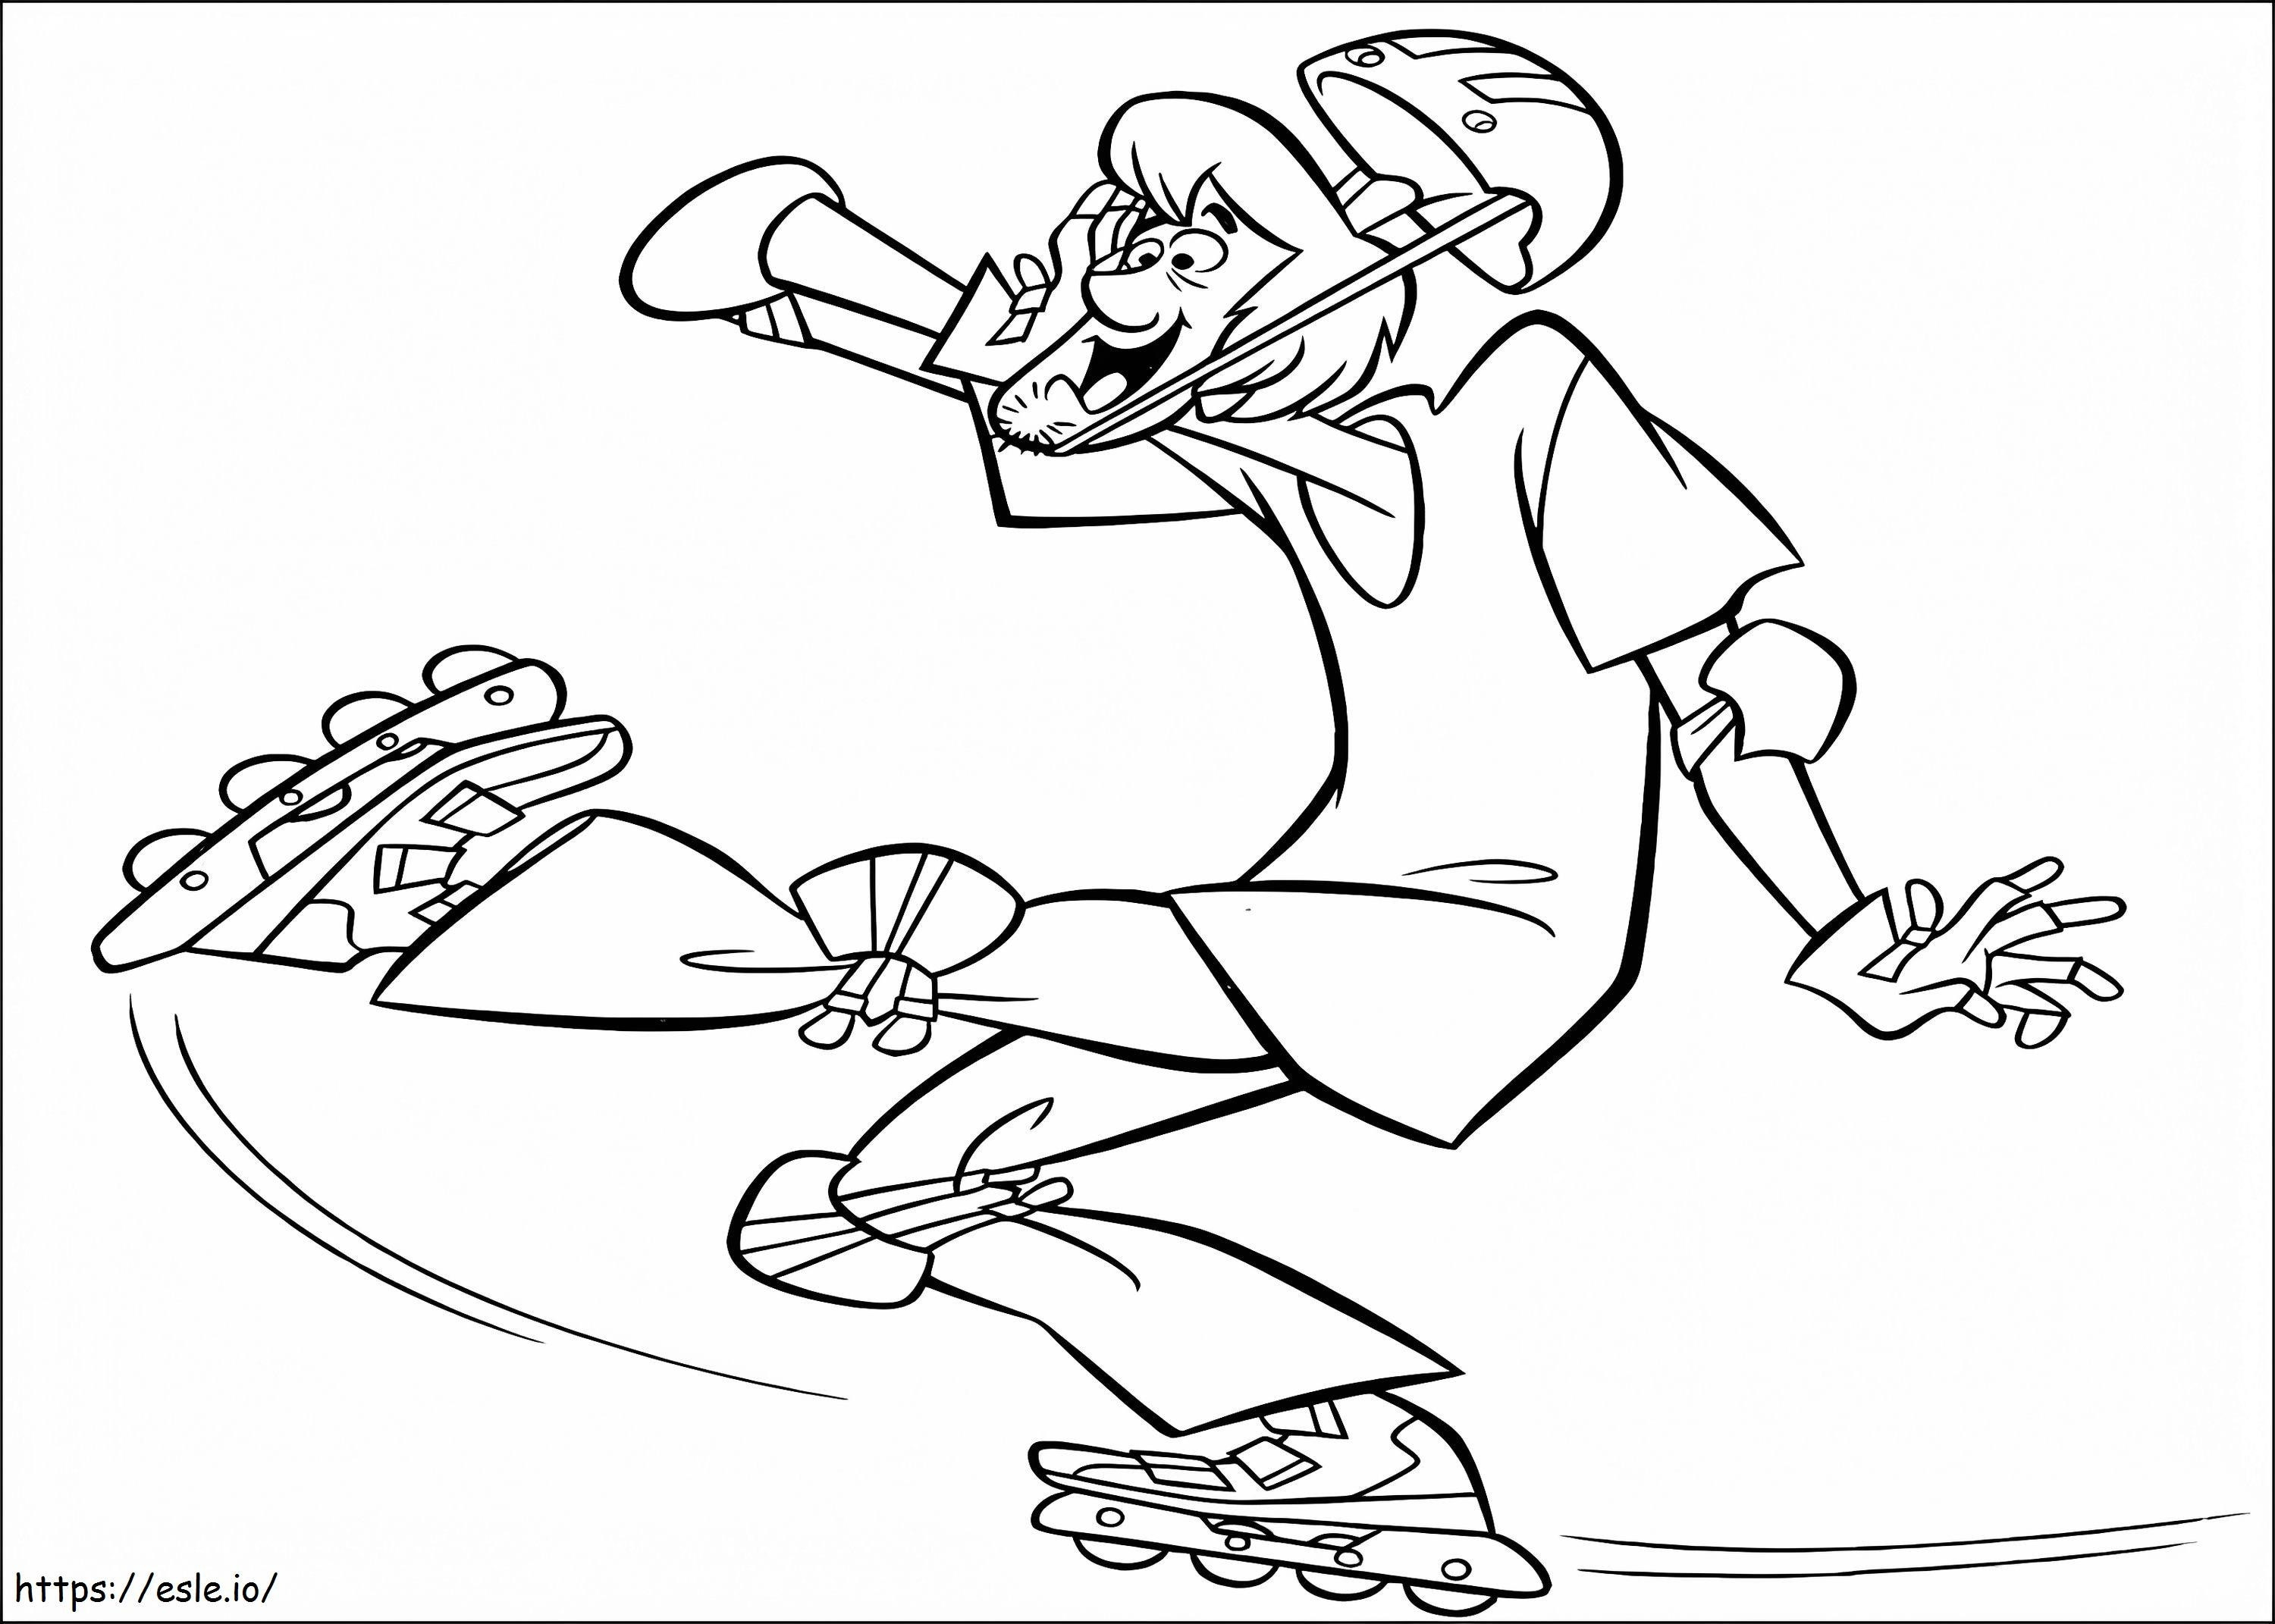 Shaggy Roller Skating coloring page